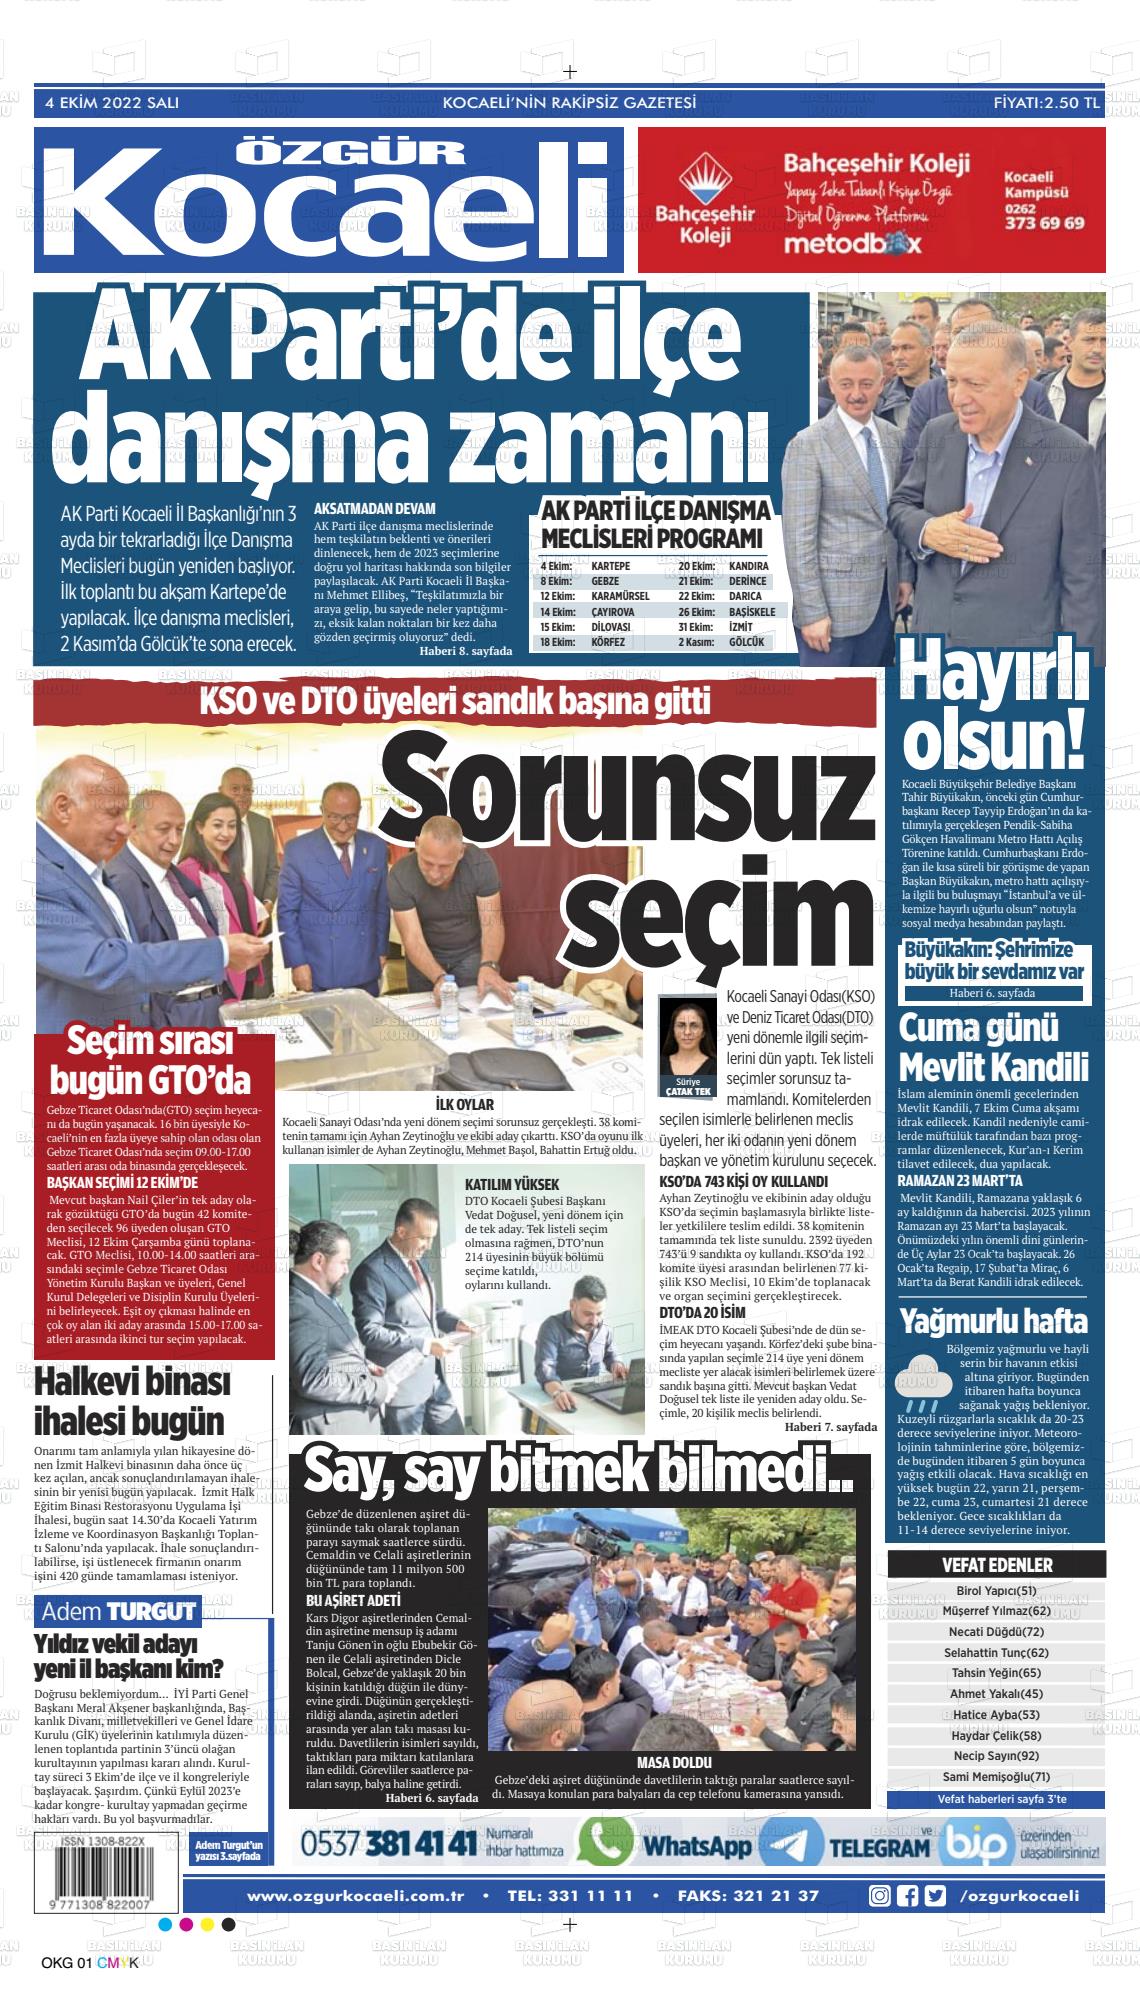 04 Ekim 2022 Özgür Kocaeli Gazete Manşeti